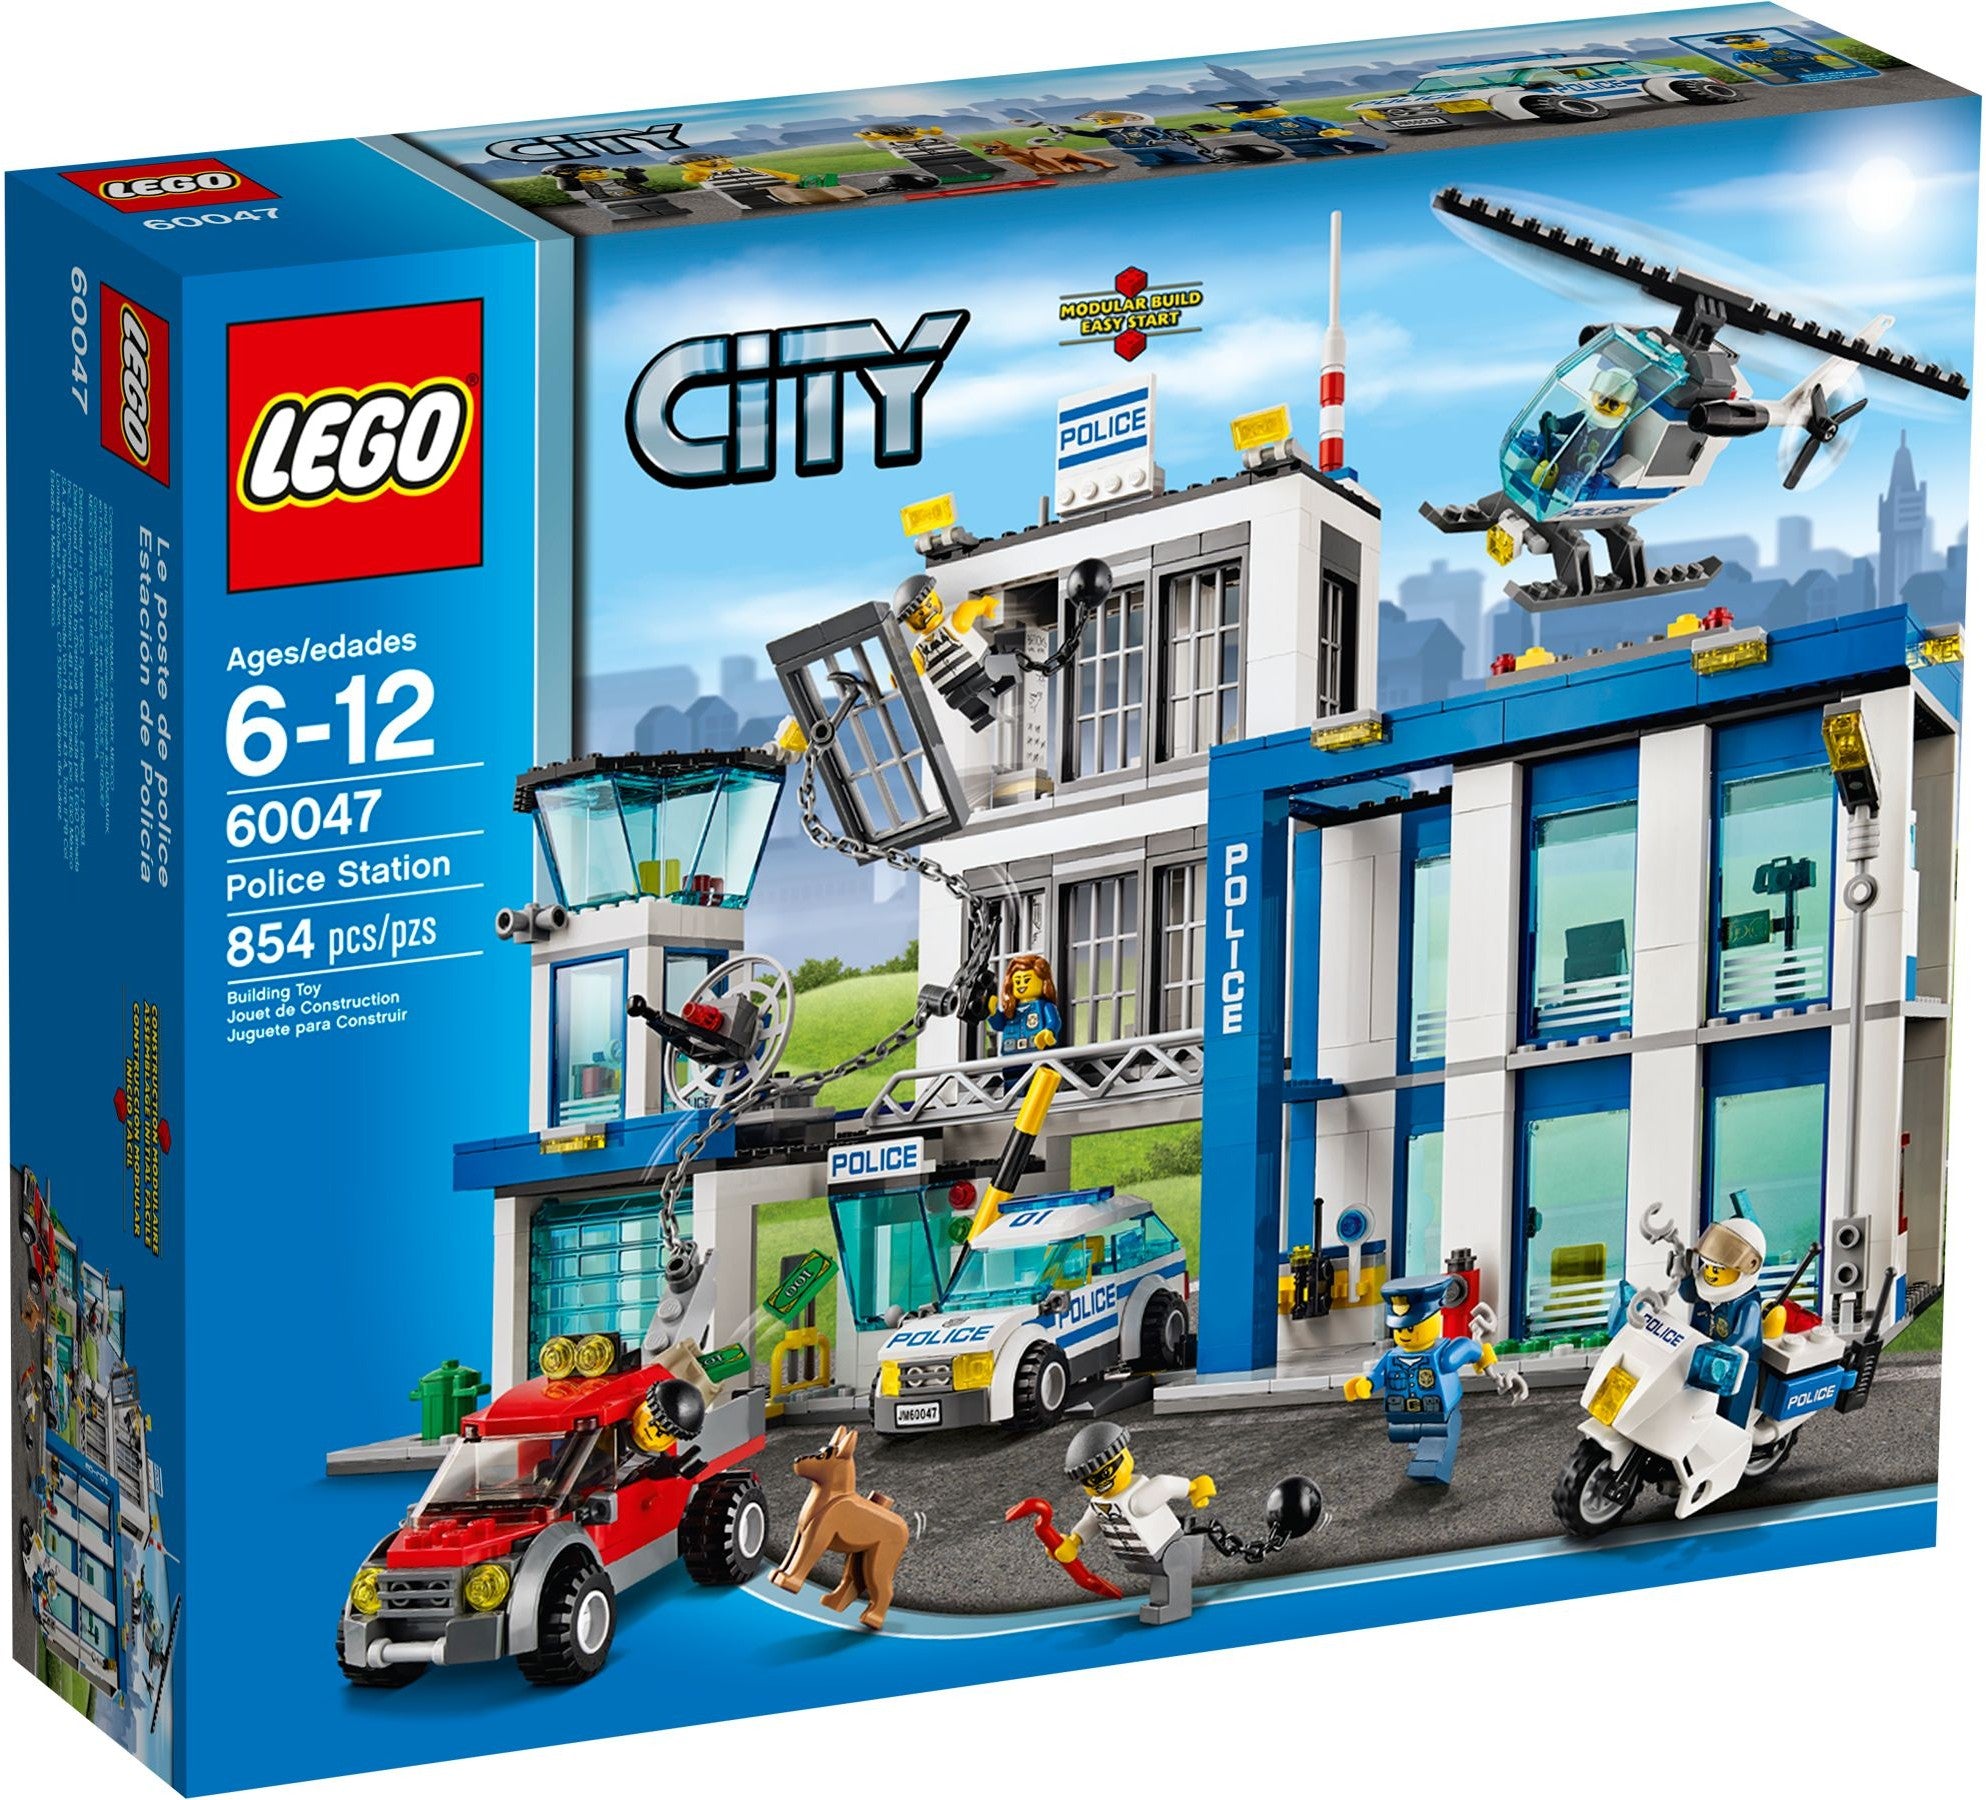 Lego City 60047 - Police Station